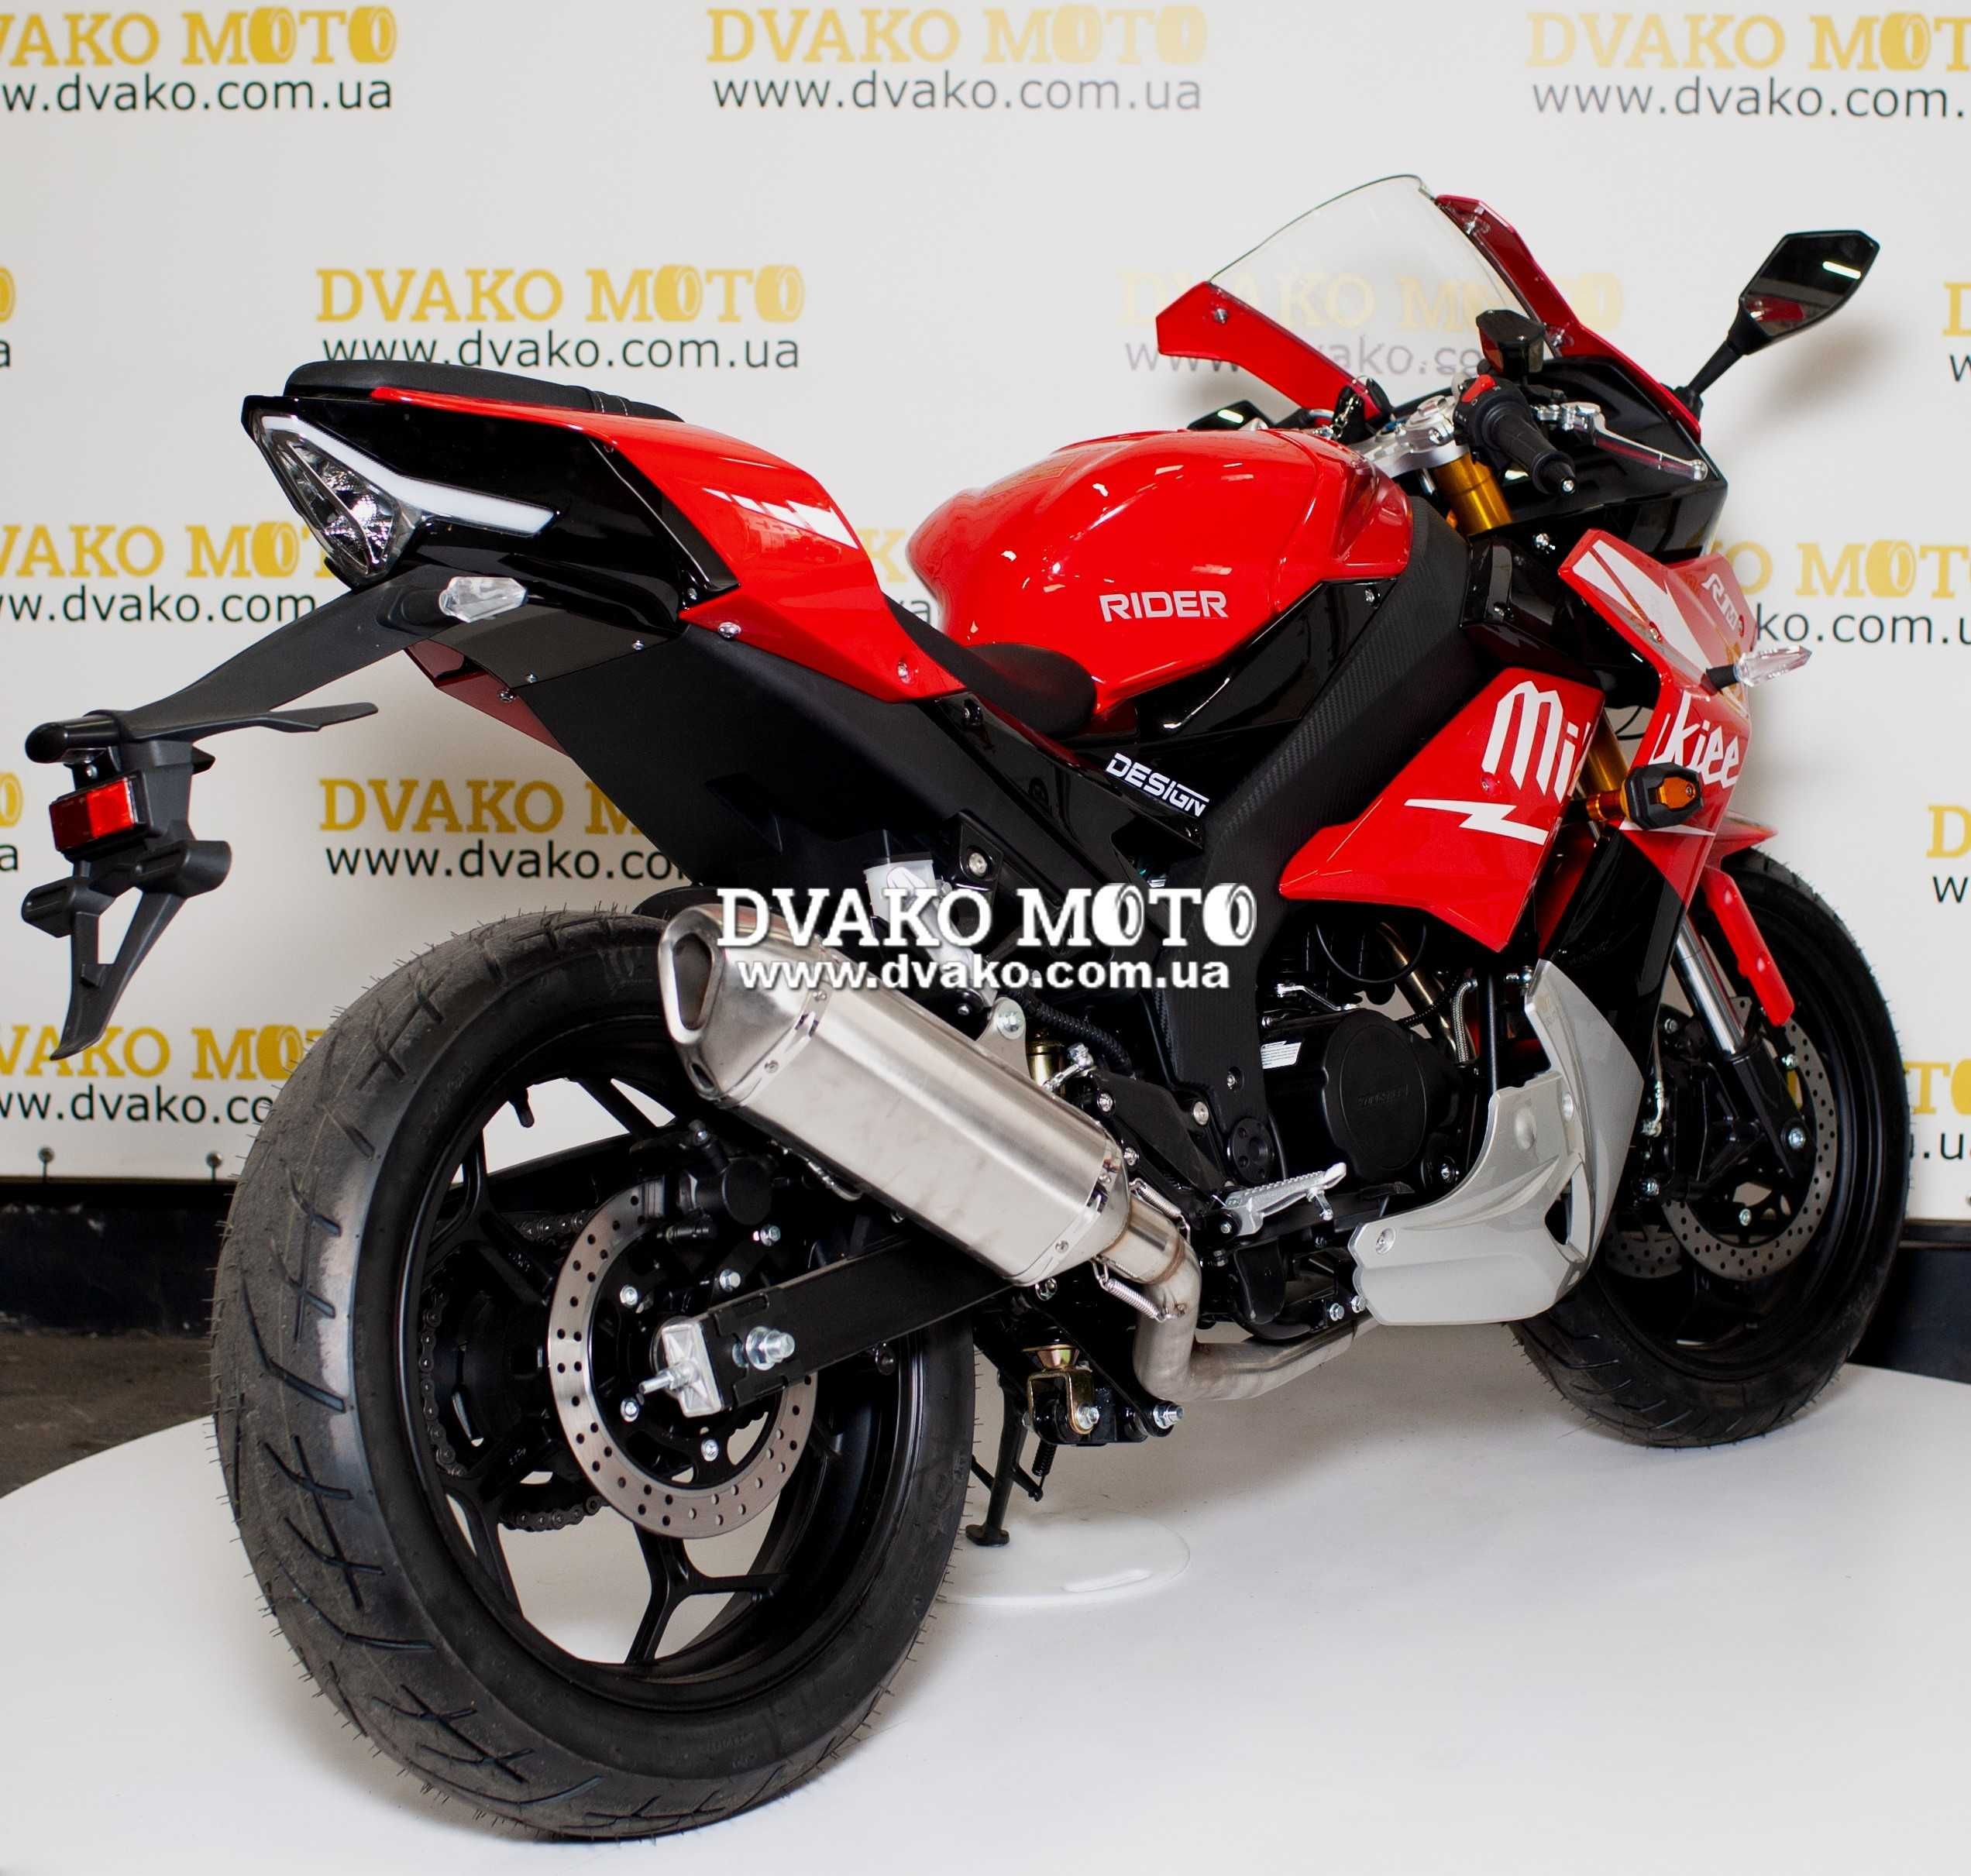 Новый Мотоцикл Rider R1M 250. Сервис, Гарантия, КРЕДИТ (Мотосалон)!!